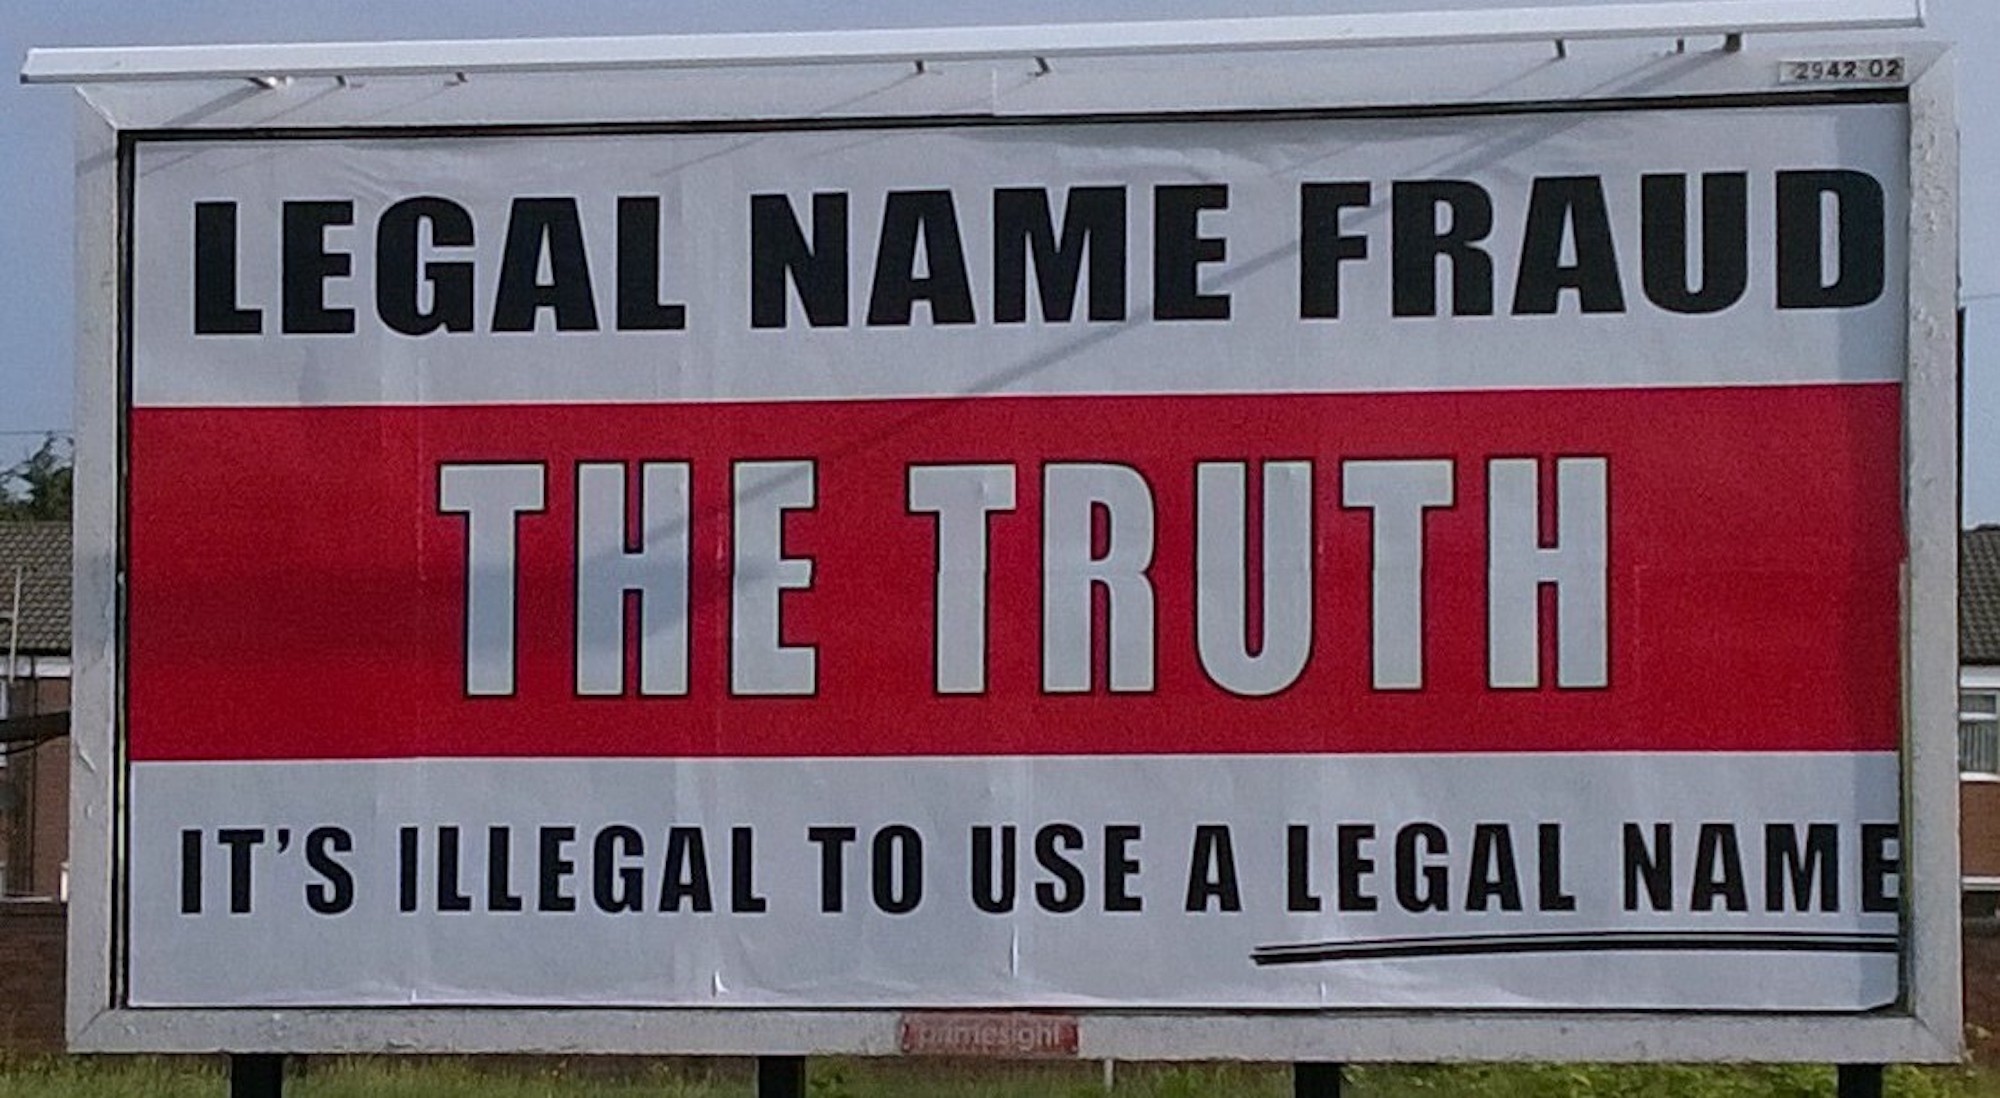 Legal name fraud poster